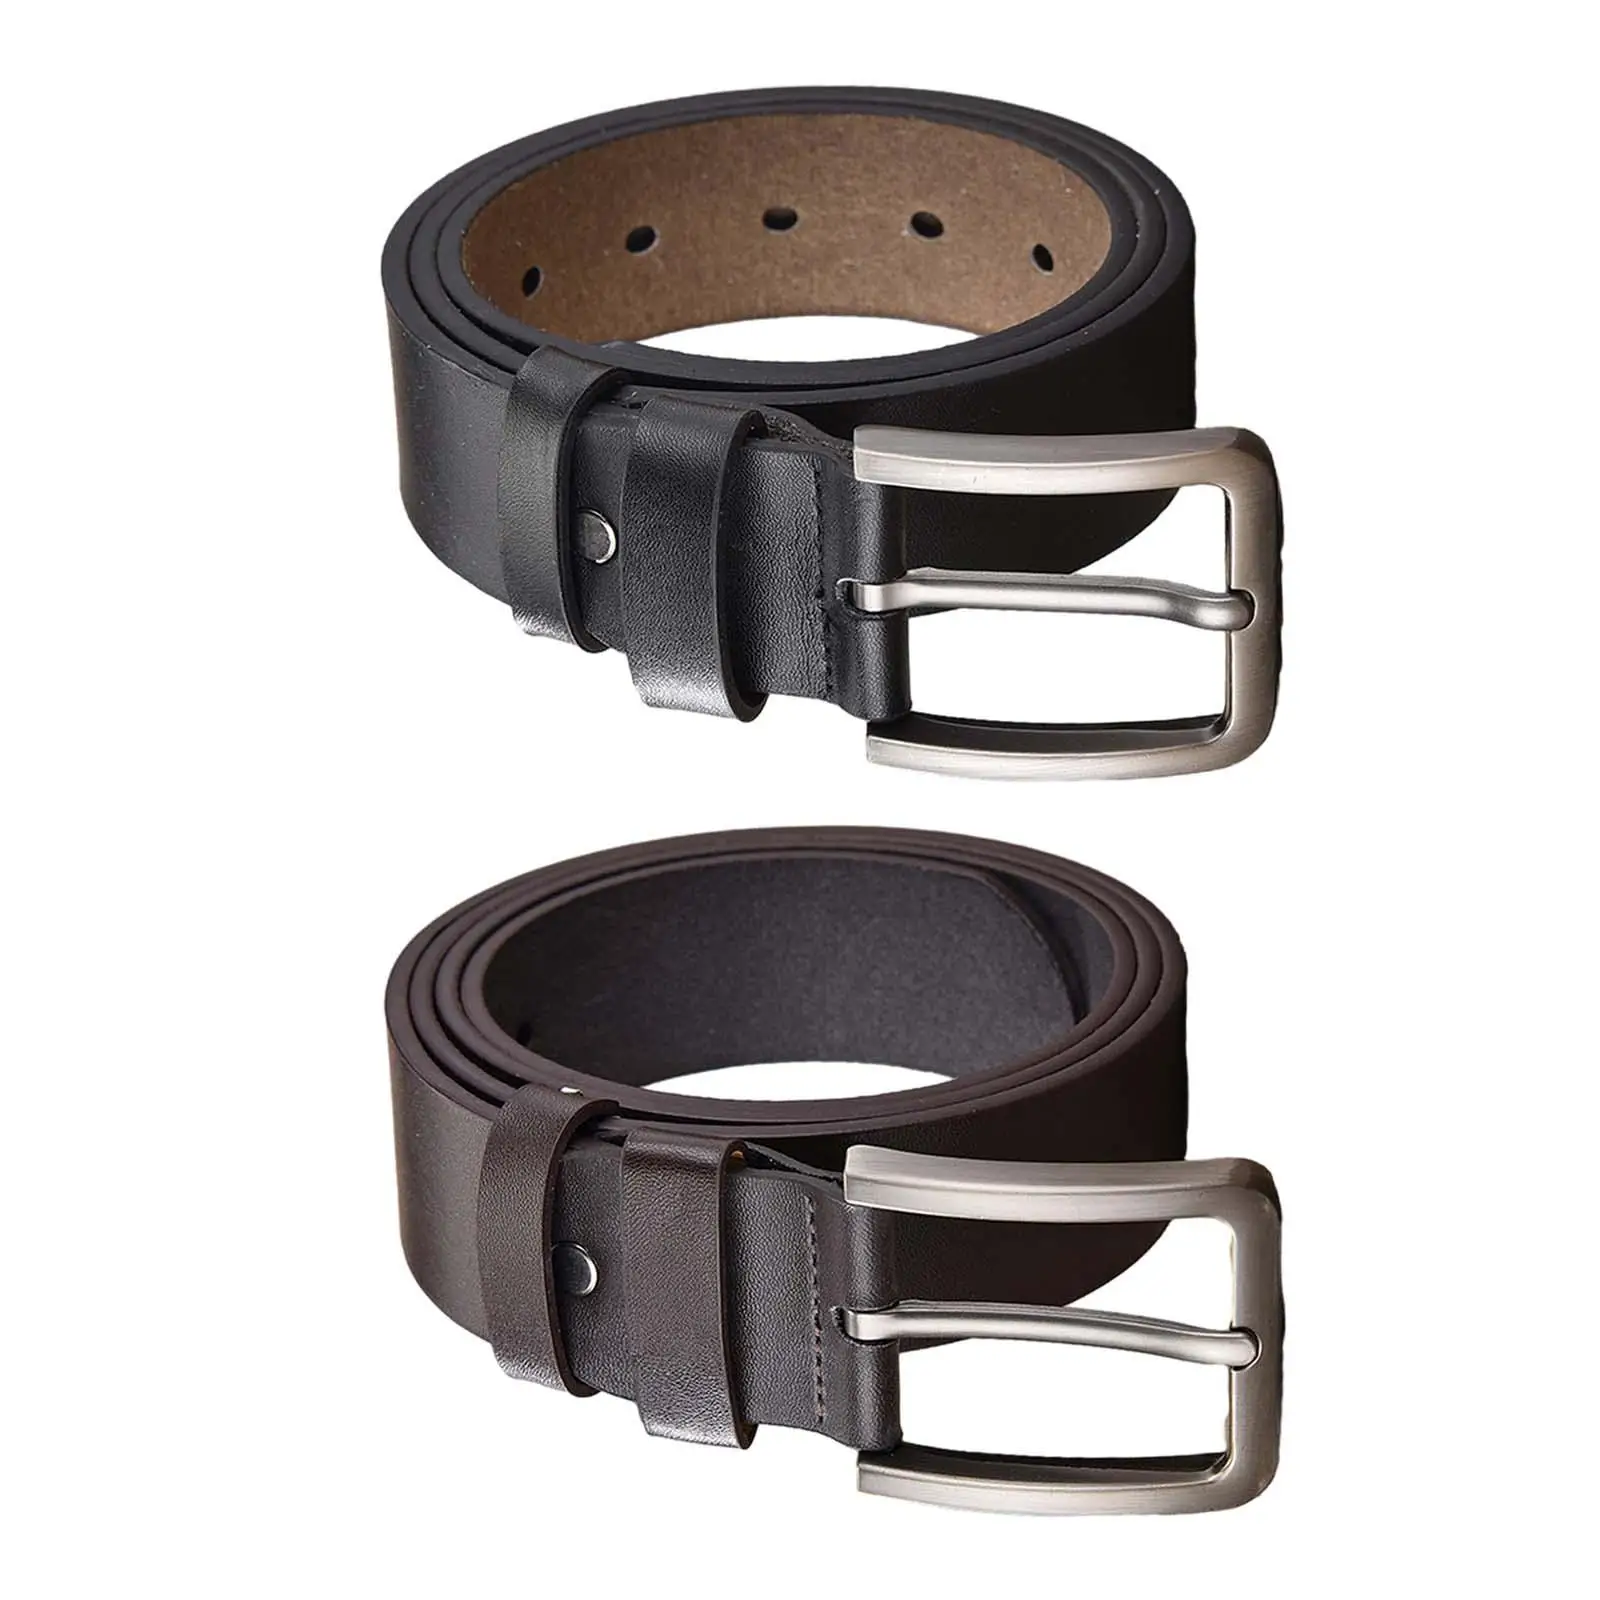 Men Belt PU Leather Belt Pin Buckle 47inch Long Adjustable Casual Waistband Waist Strap for Work Wedding Uniform Jeans Trousers